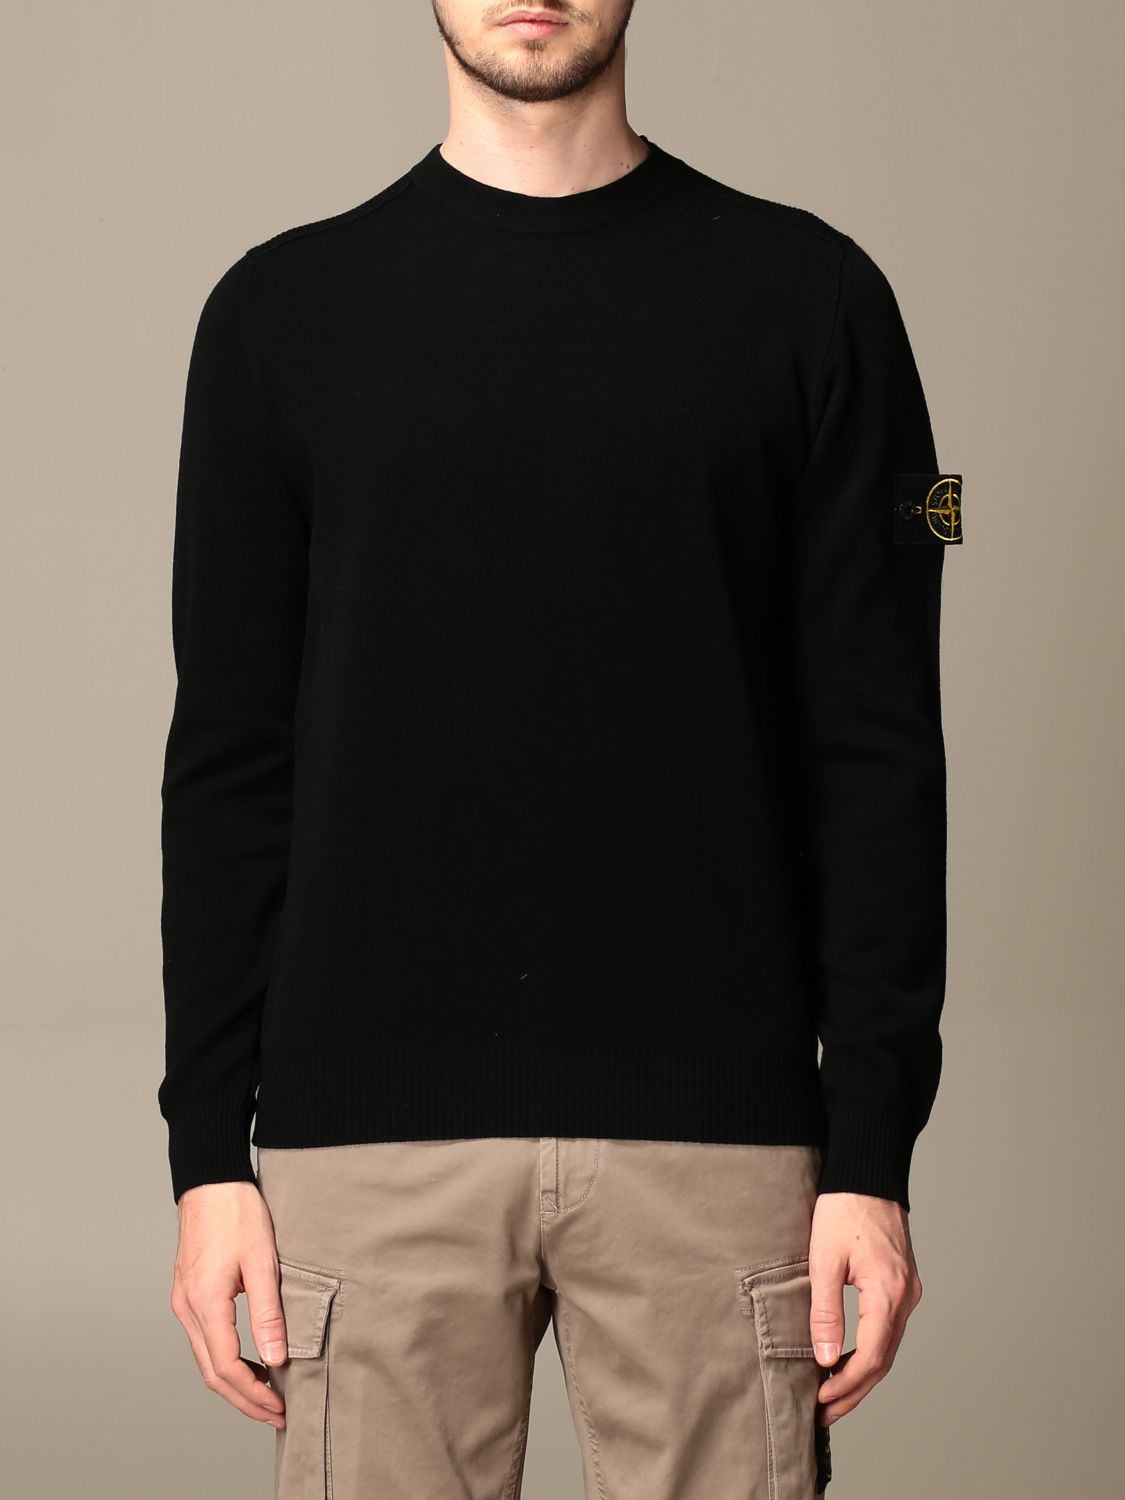 kas Deuk Alternatief voorstel STONE ISLAND: crewneck sweater with logo - Black | Stone Island sweater  591A1 online on GIGLIO.COM